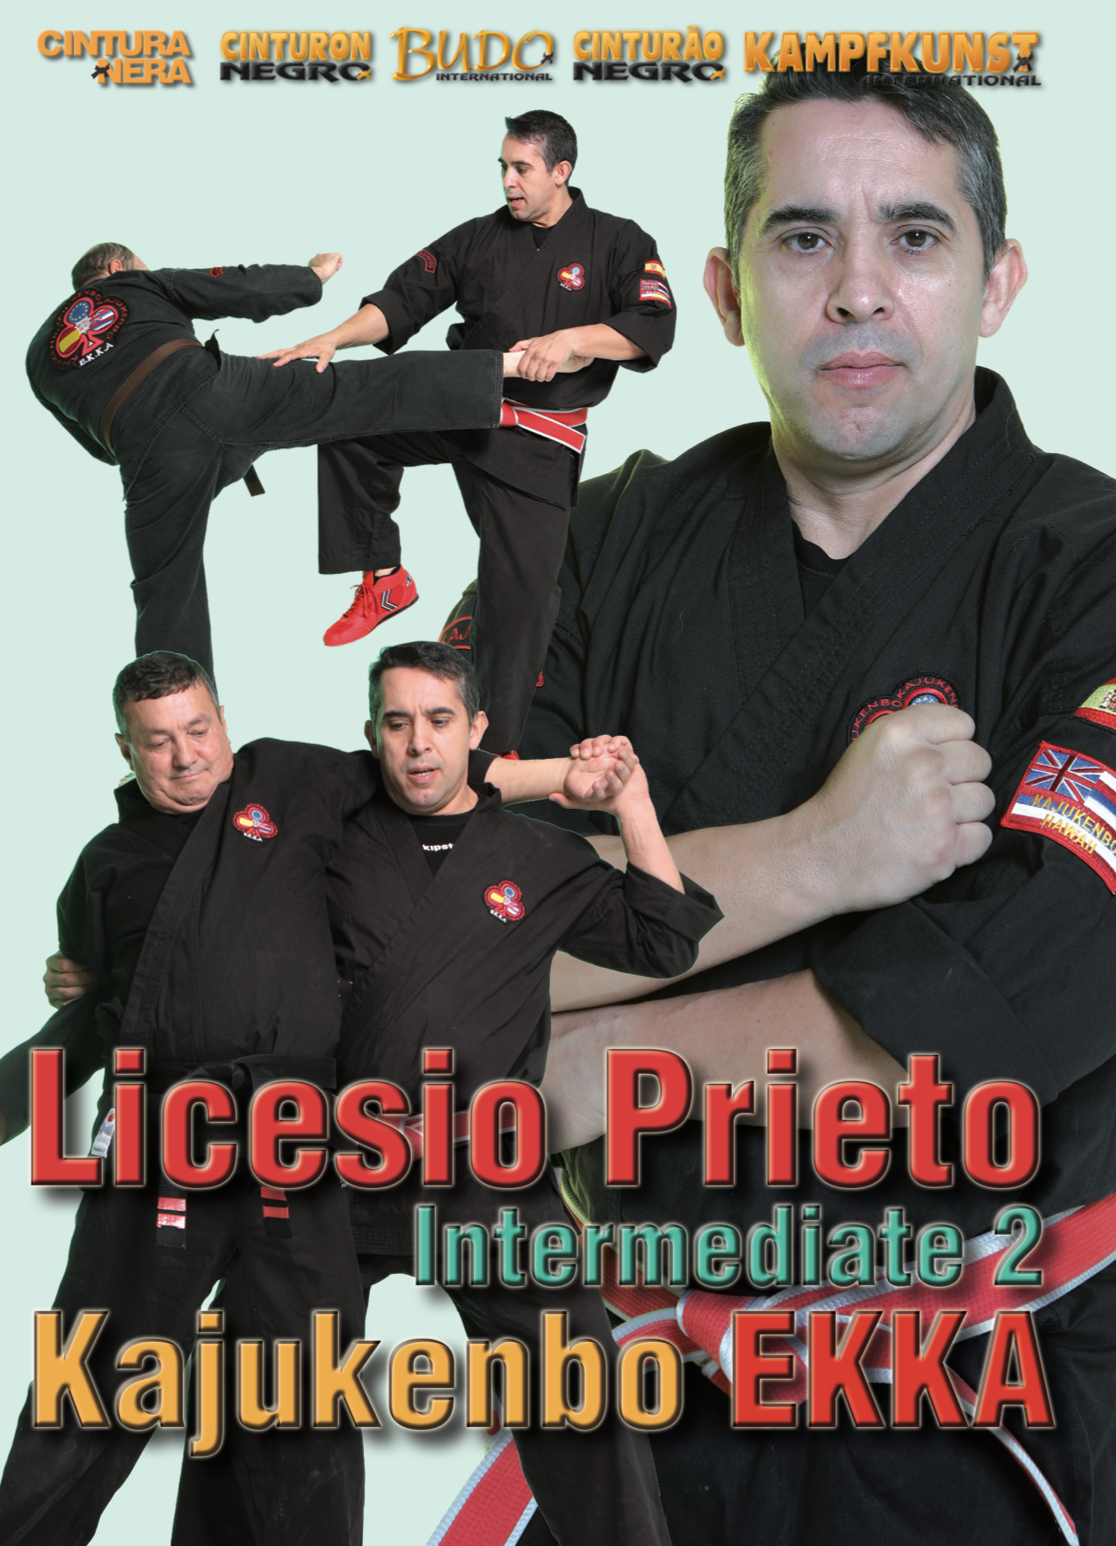 Kajukenbo Essential Intermediate 2 DVD with Licesio Prieto